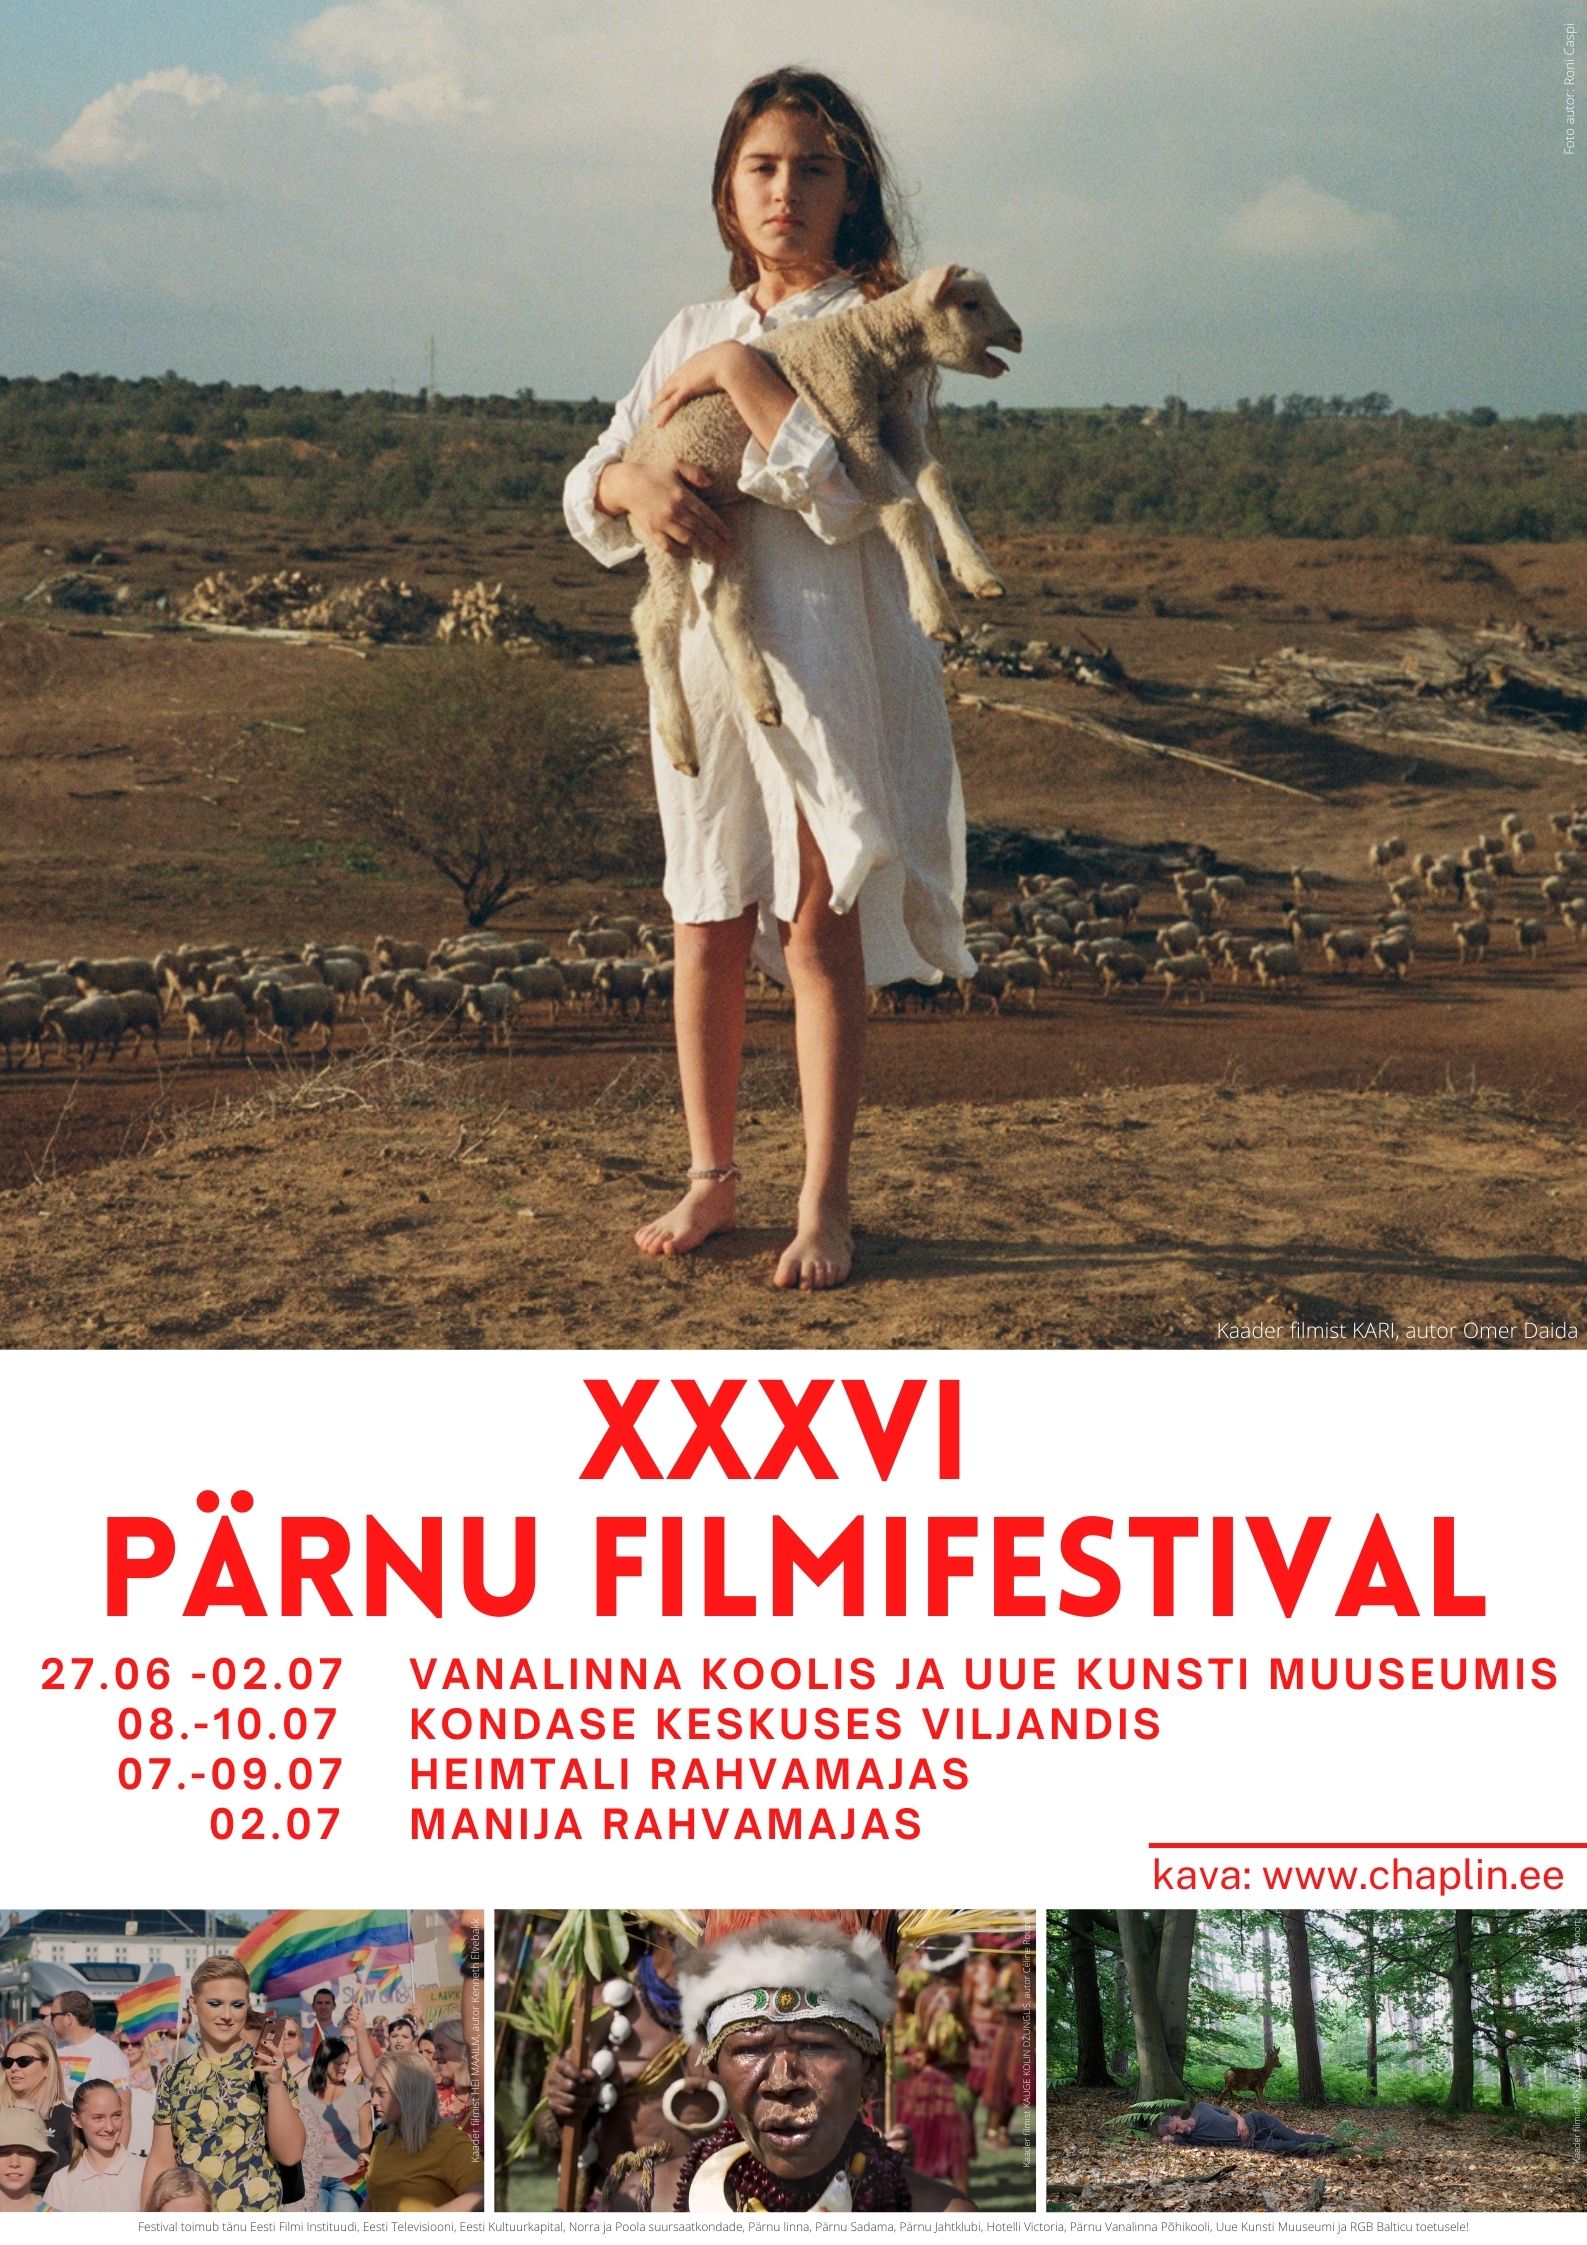 PROGRAM OF THE XXXVI PÄRNU FILM FESTIVAL – Pärnu filmifestival